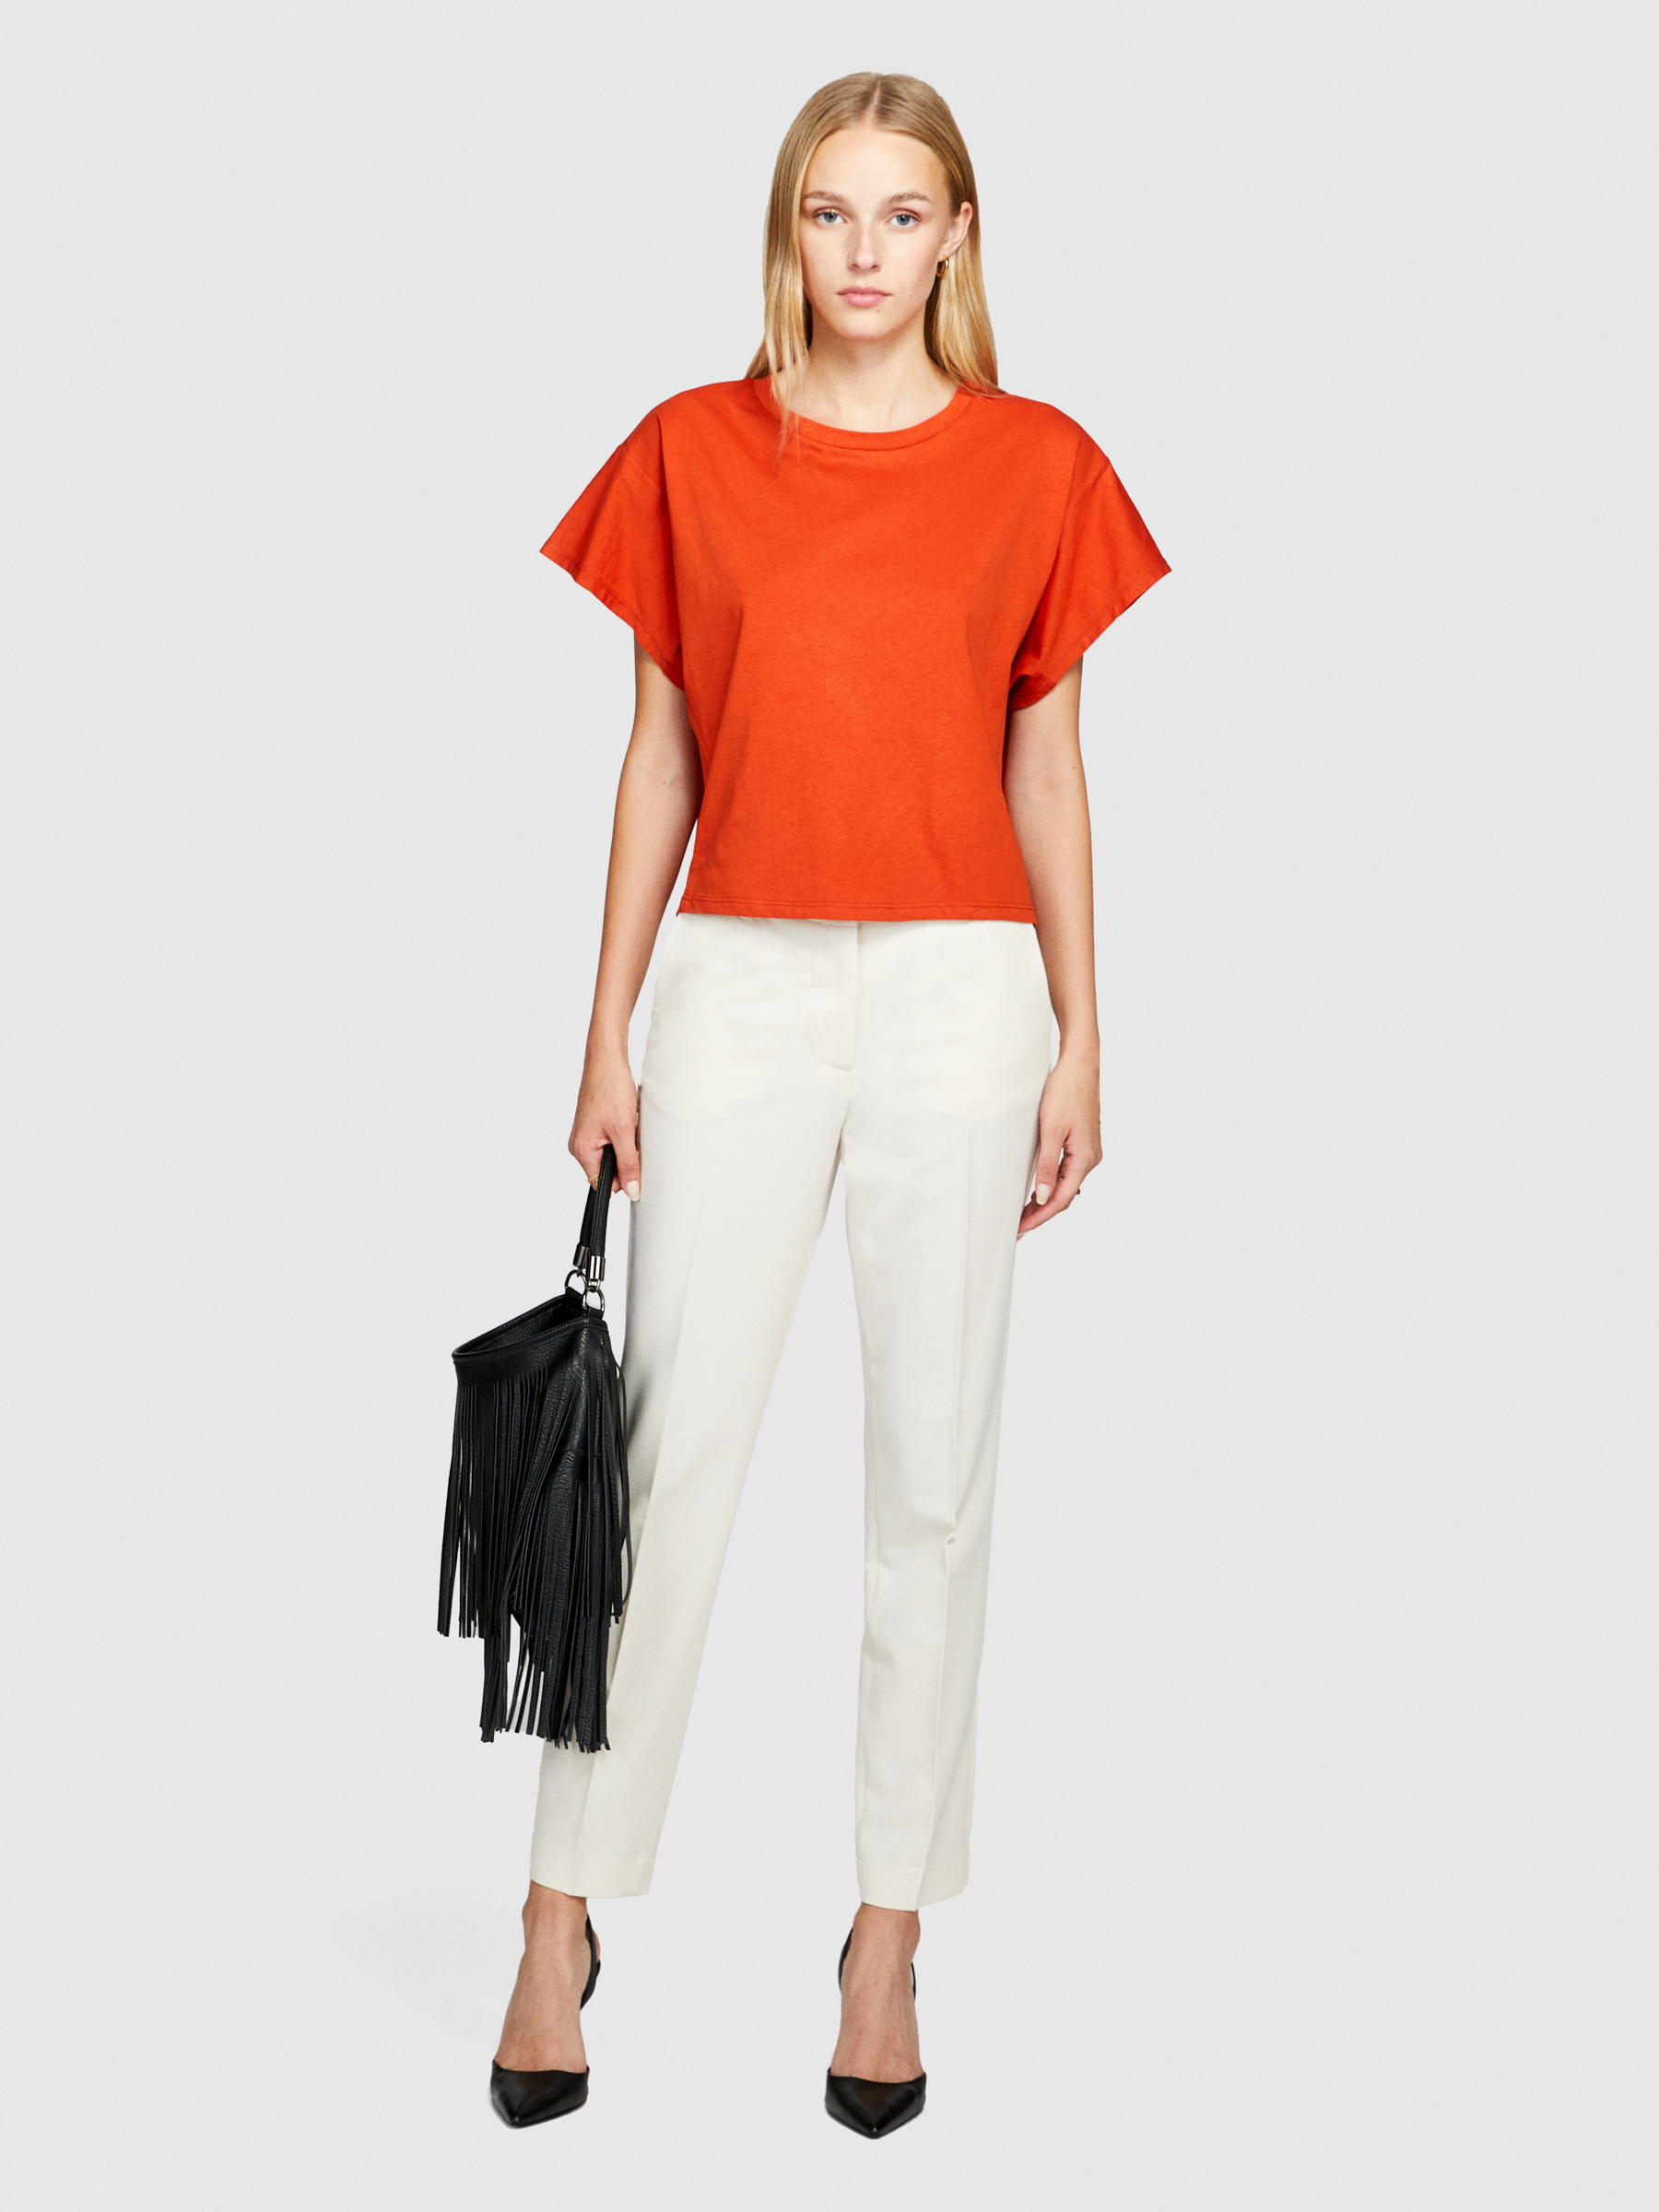 Sisley - Boxy Fit T-shirt, Woman, Orange, Size: M